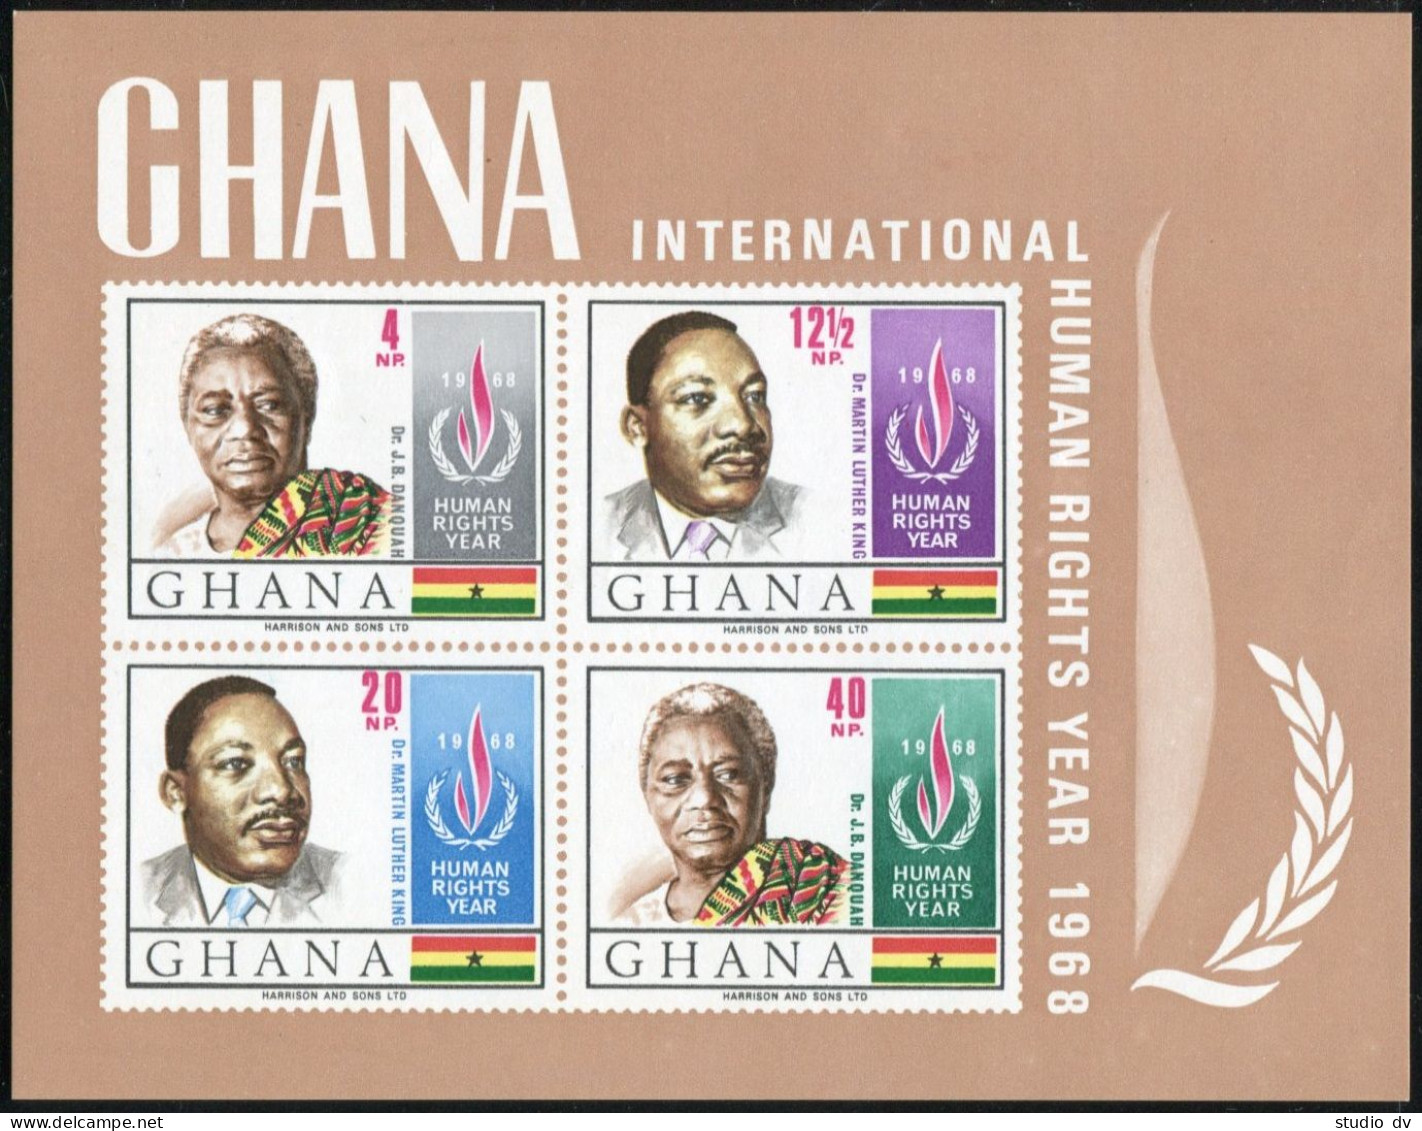 Ghana 351a Sheet, MNH. Michel Bl.35. Human Rights Year IHRY-1968. - Preobliterati